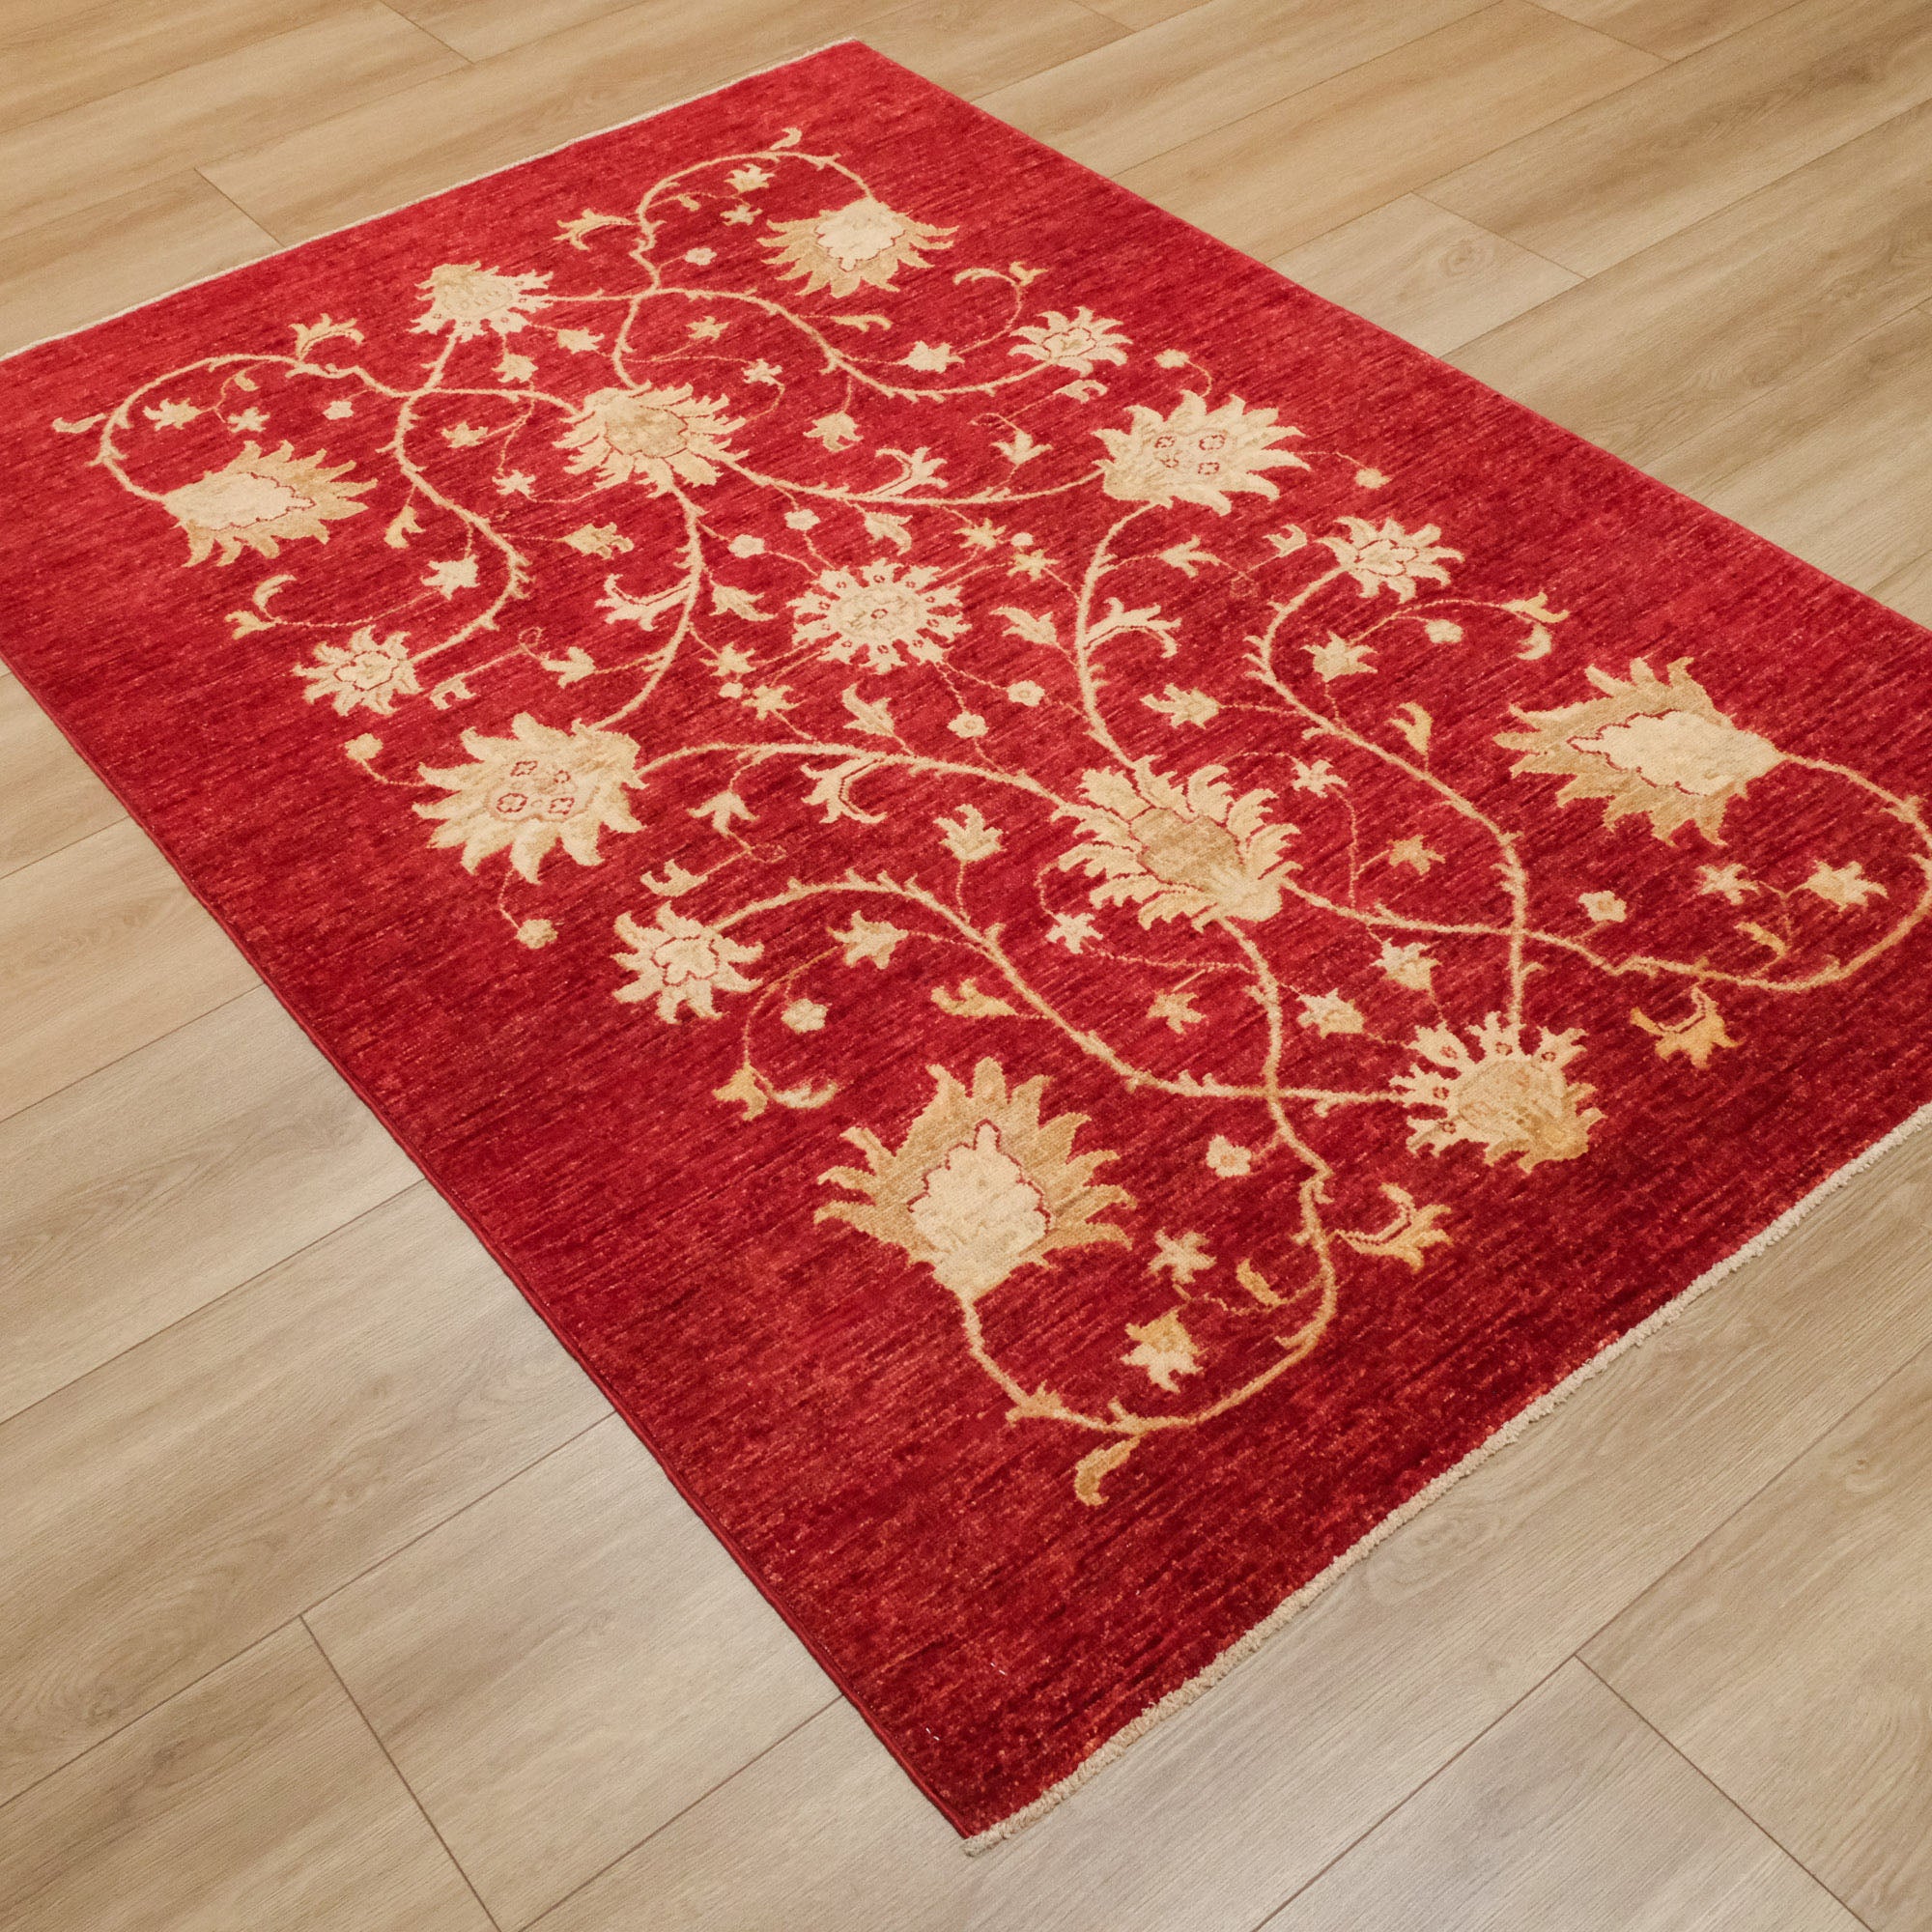 Hand Woven Anatolian Patterned Red Wool Cotton Carpet